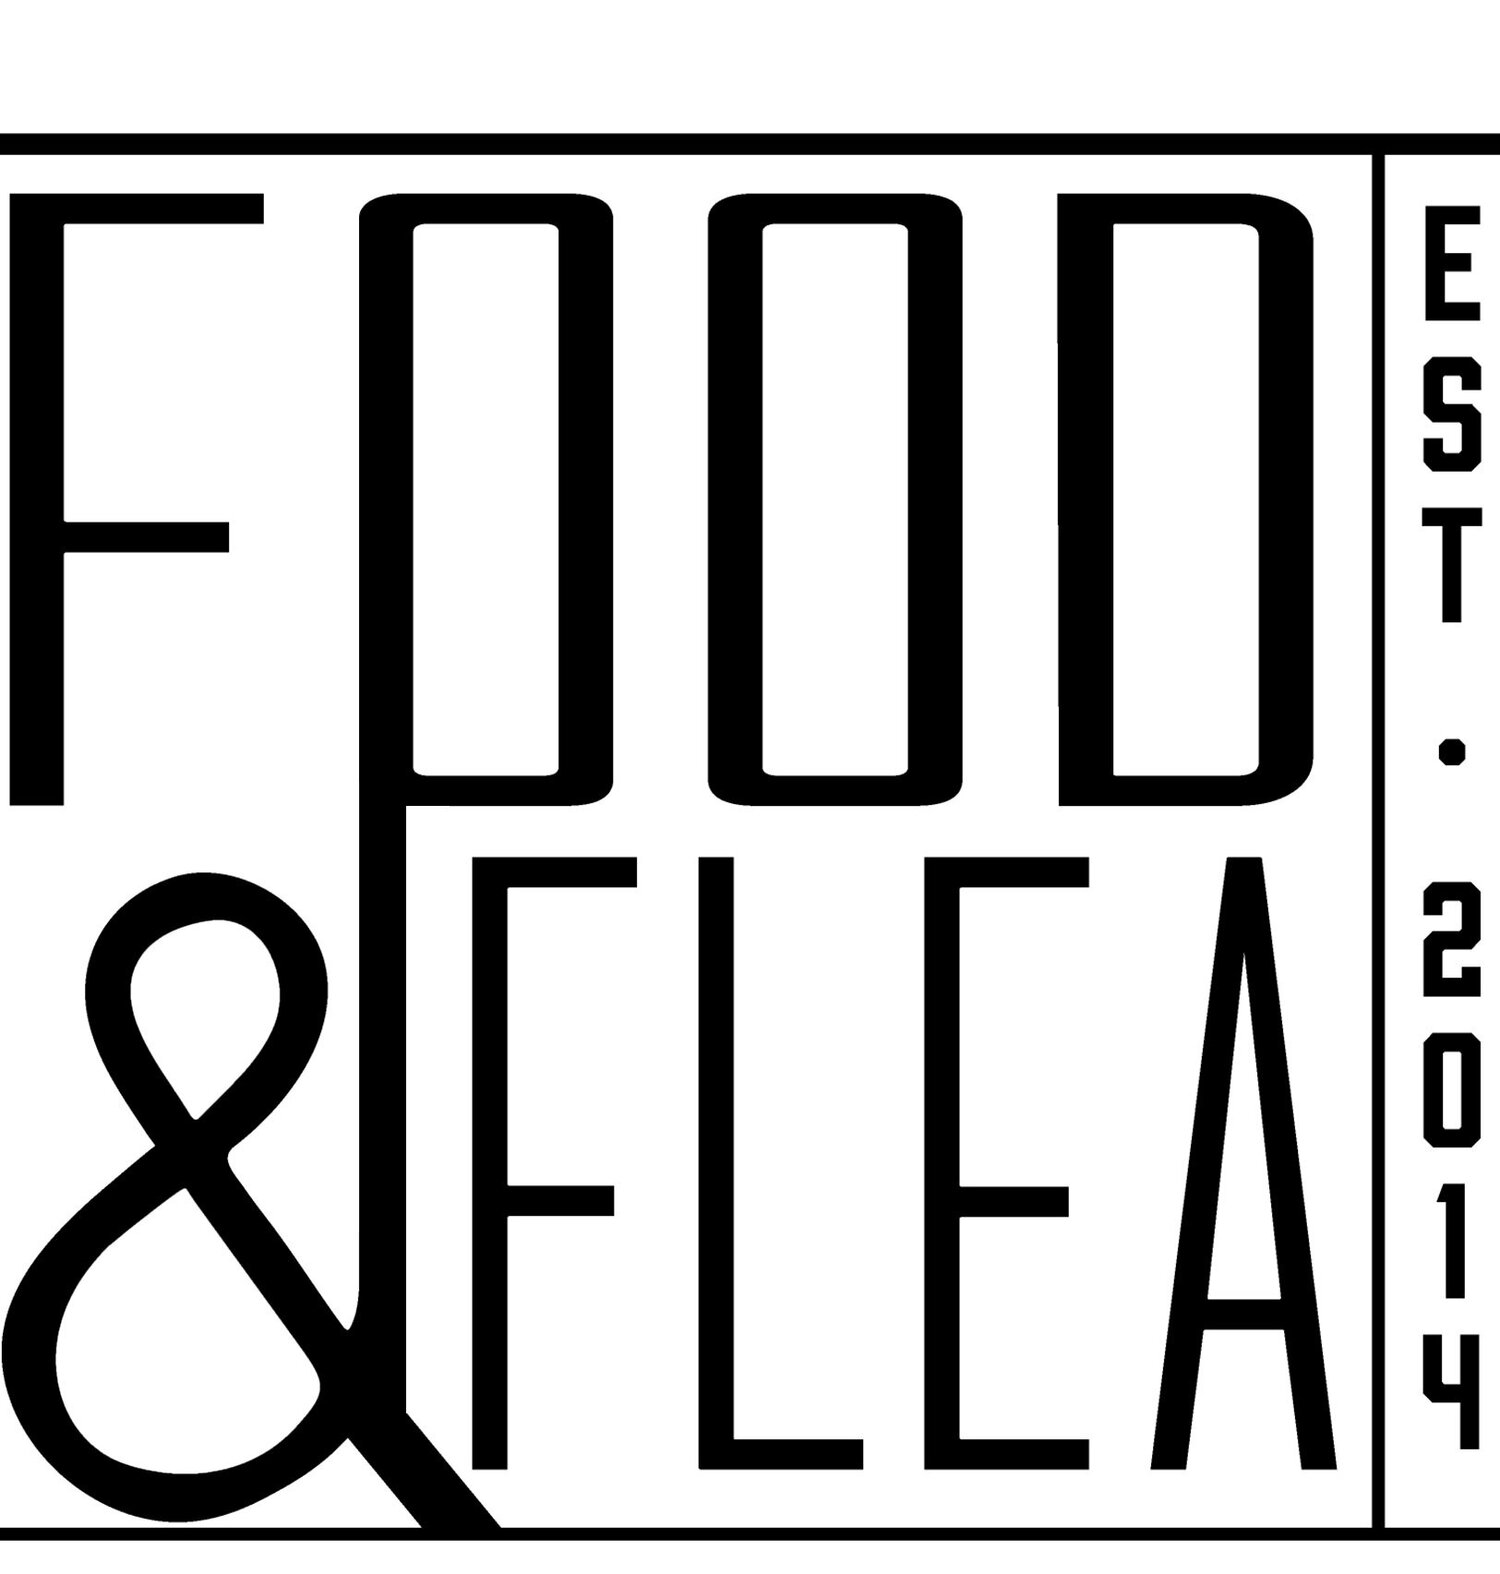 2019 Cary Holiday Food and Flea Market